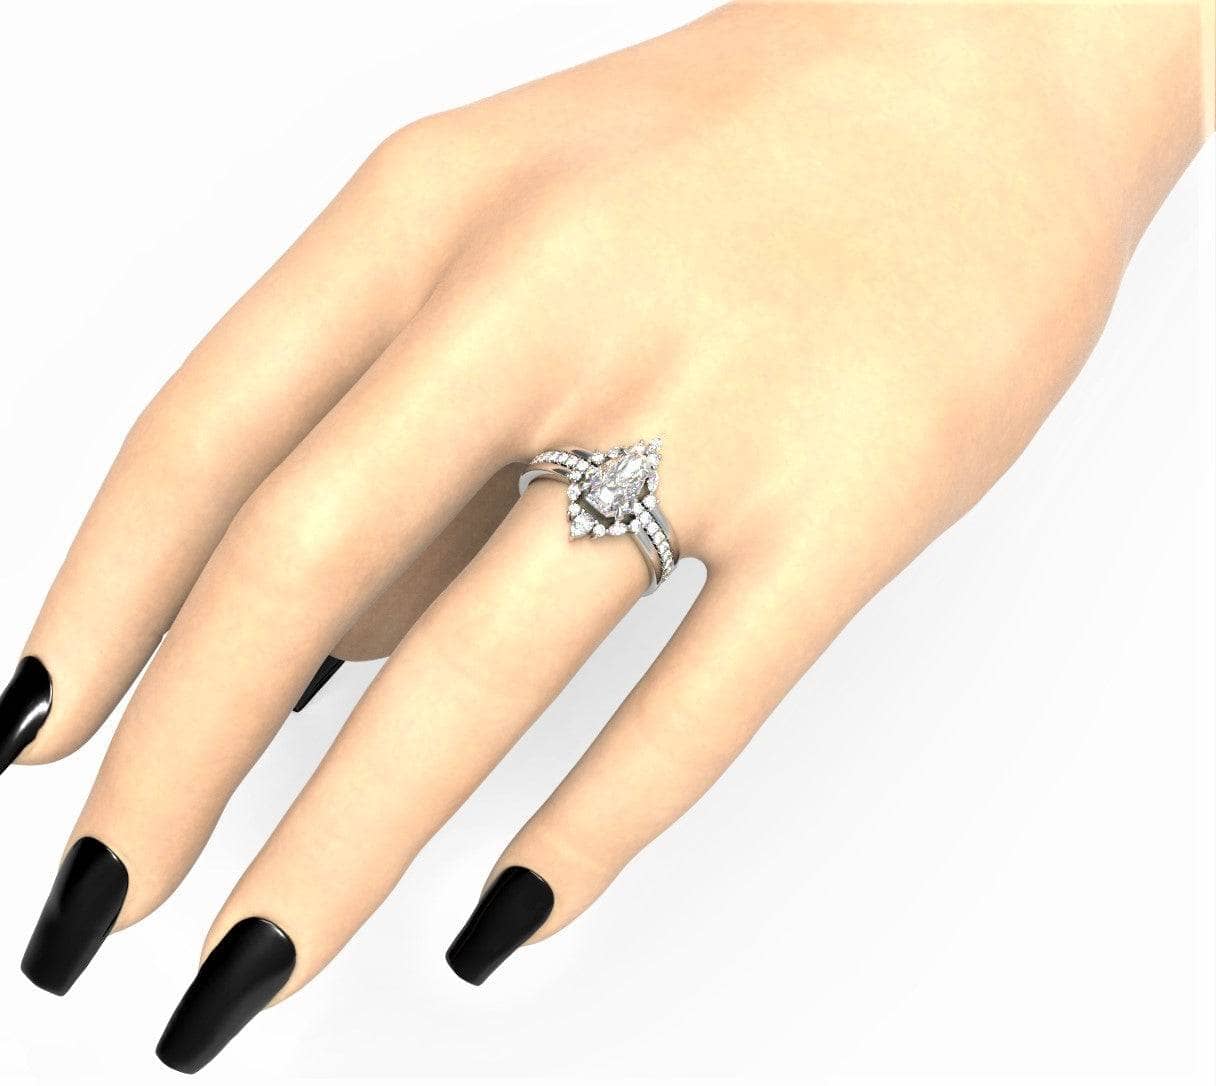 Flash Sale- Be Mine Forever- Radiant Coffin Cut Moissanite Gothic Wedding Ring-Black Diamonds New York